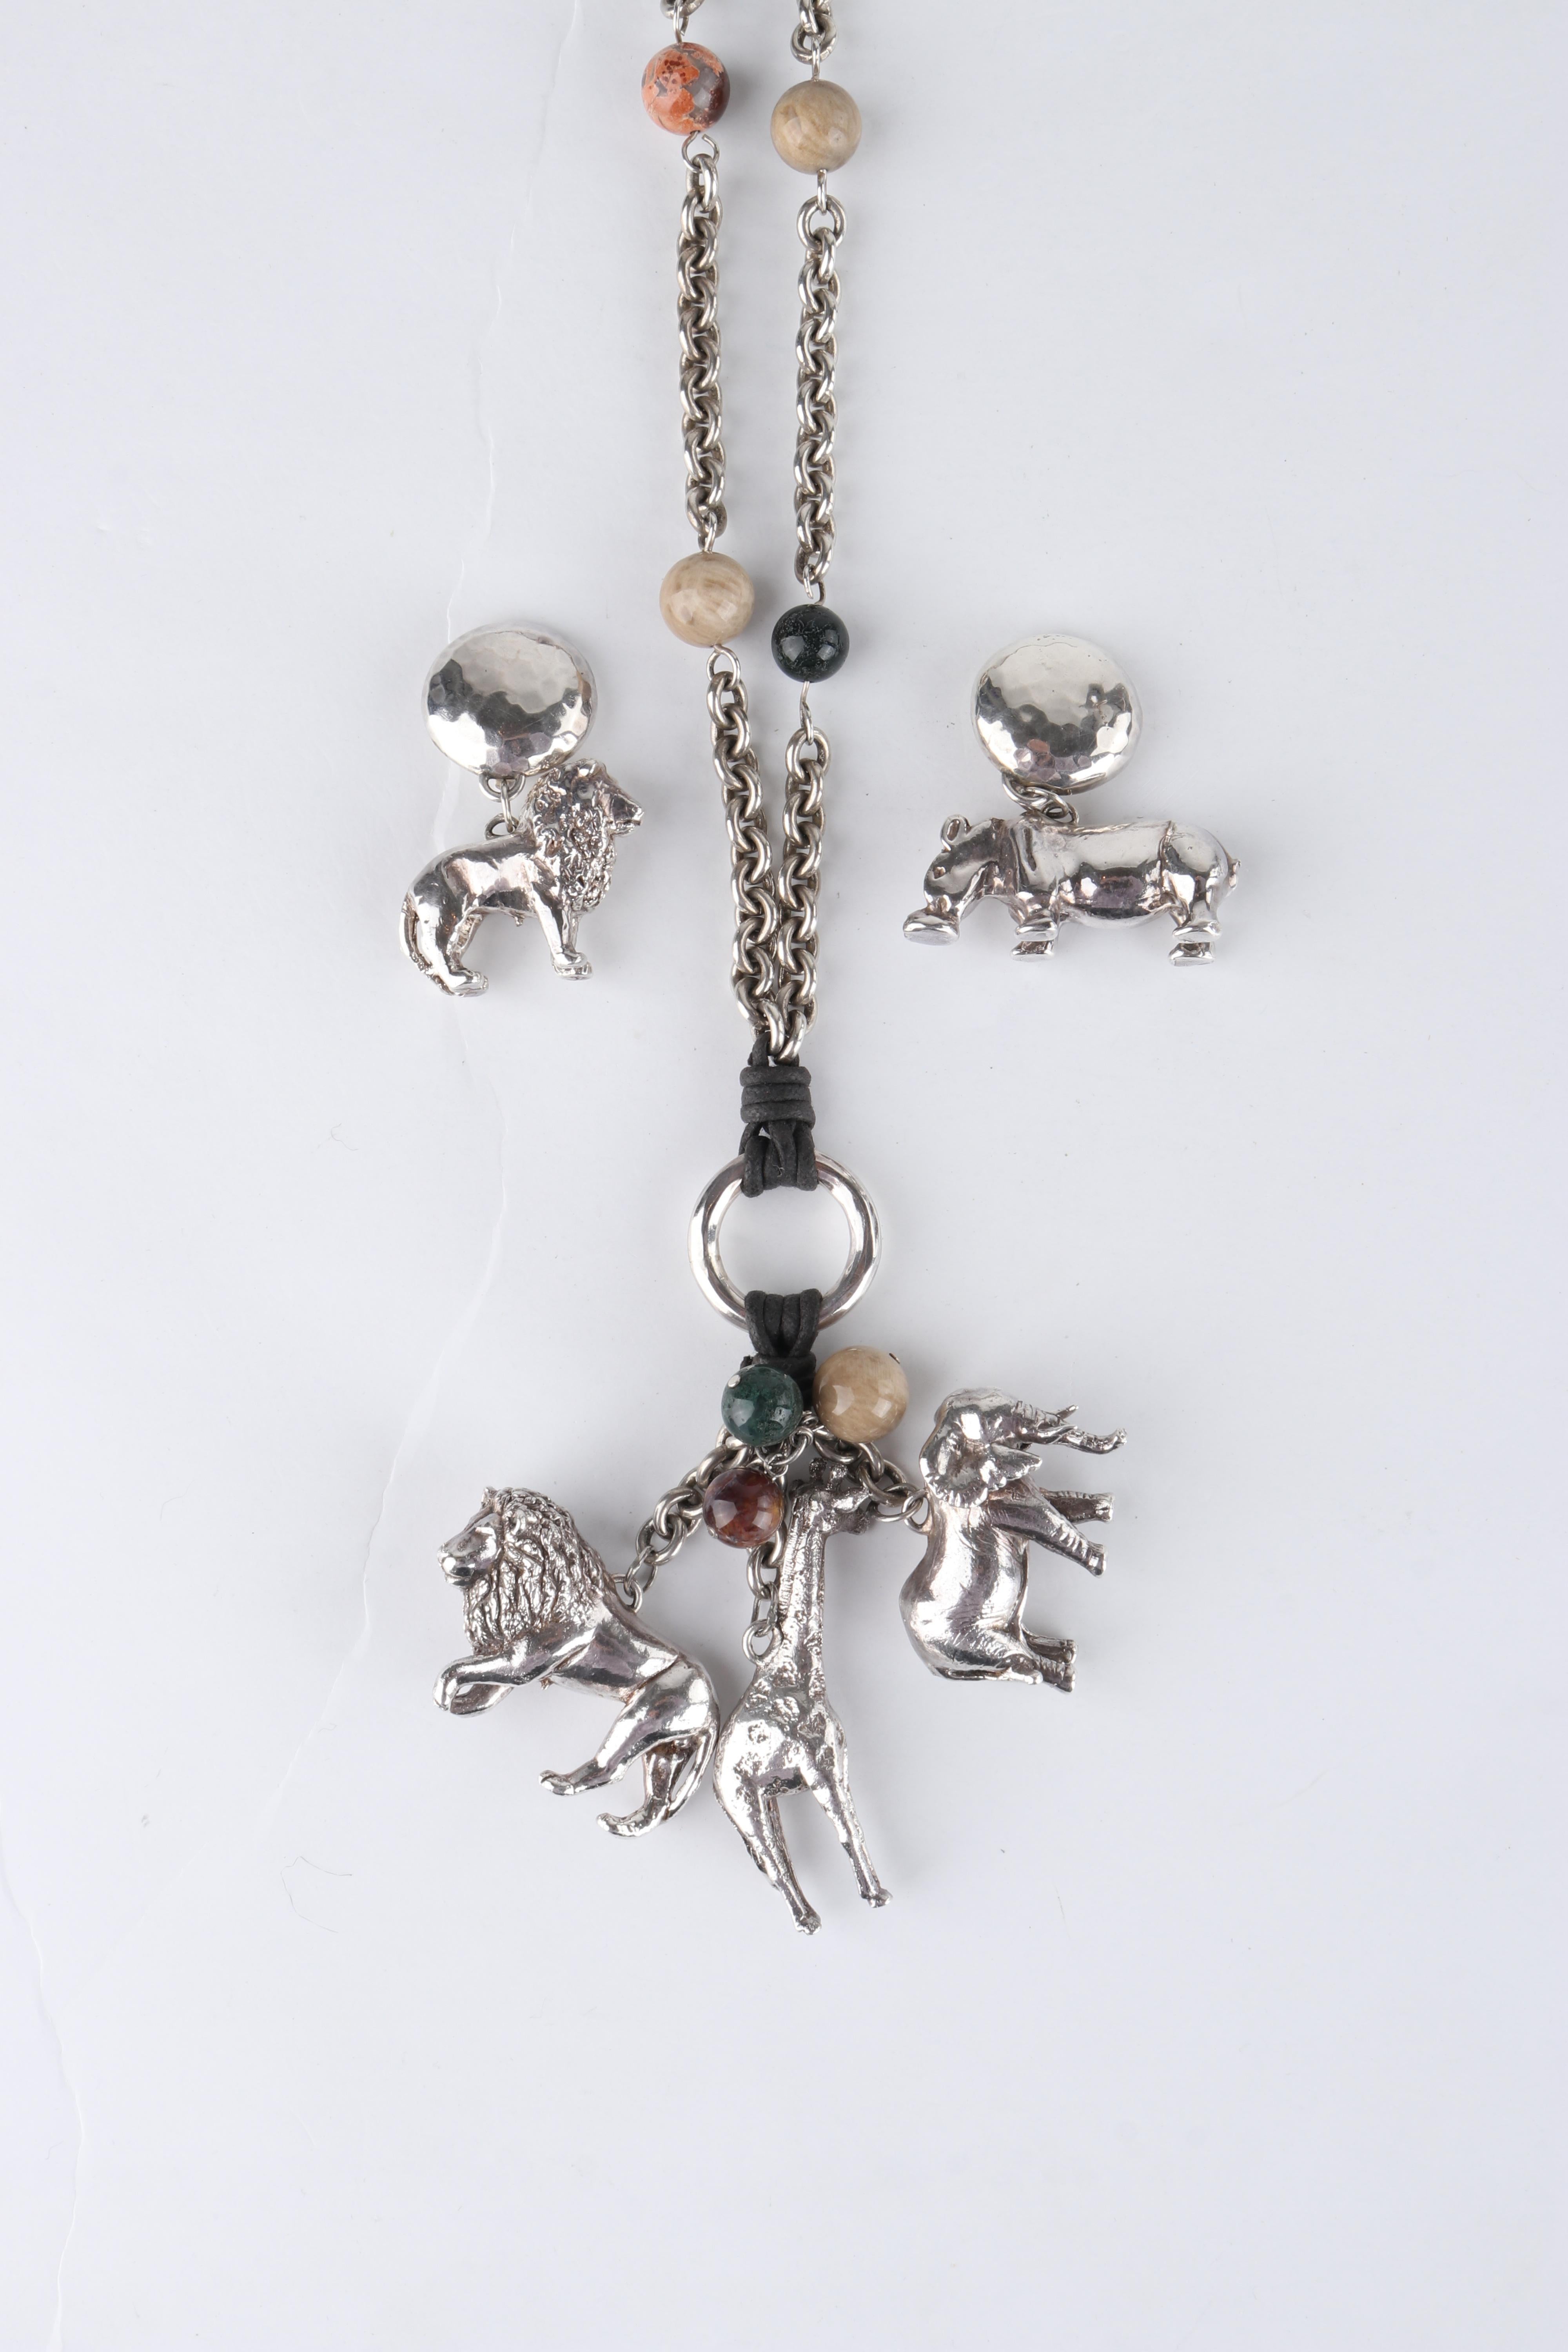 SUSAN CUMMINGS c.1990's Vtg Sterling Silber Perlen Tier Halskette Ohrringe Set

Marke / Hersteller: Susan Cummings
CIRCA: Sammlung 